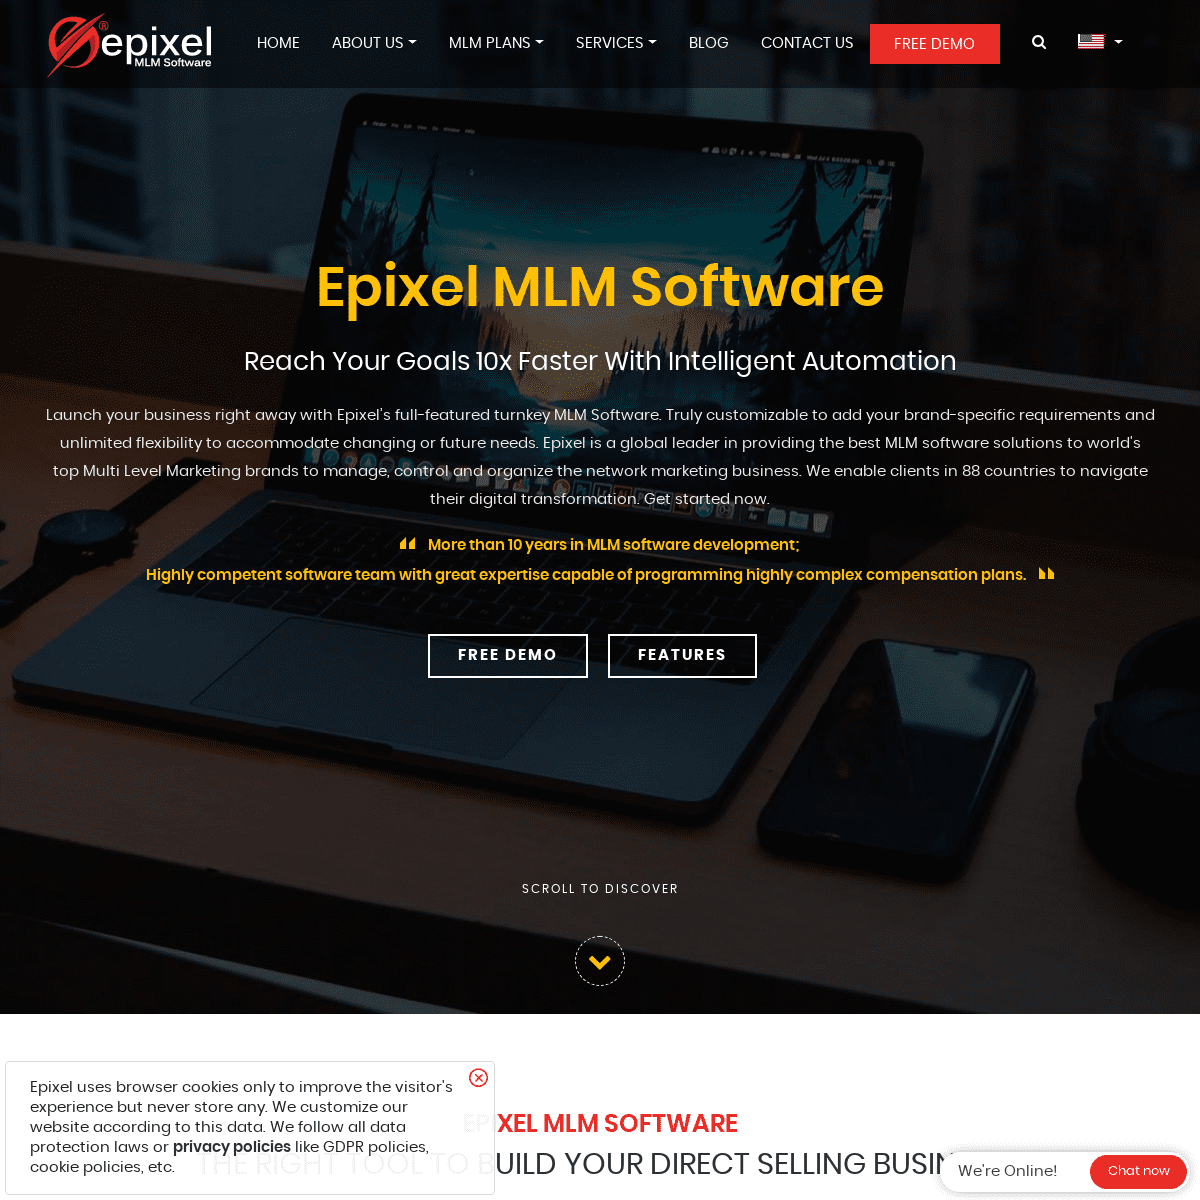 A complete backup of epixelmlmsoftware.com